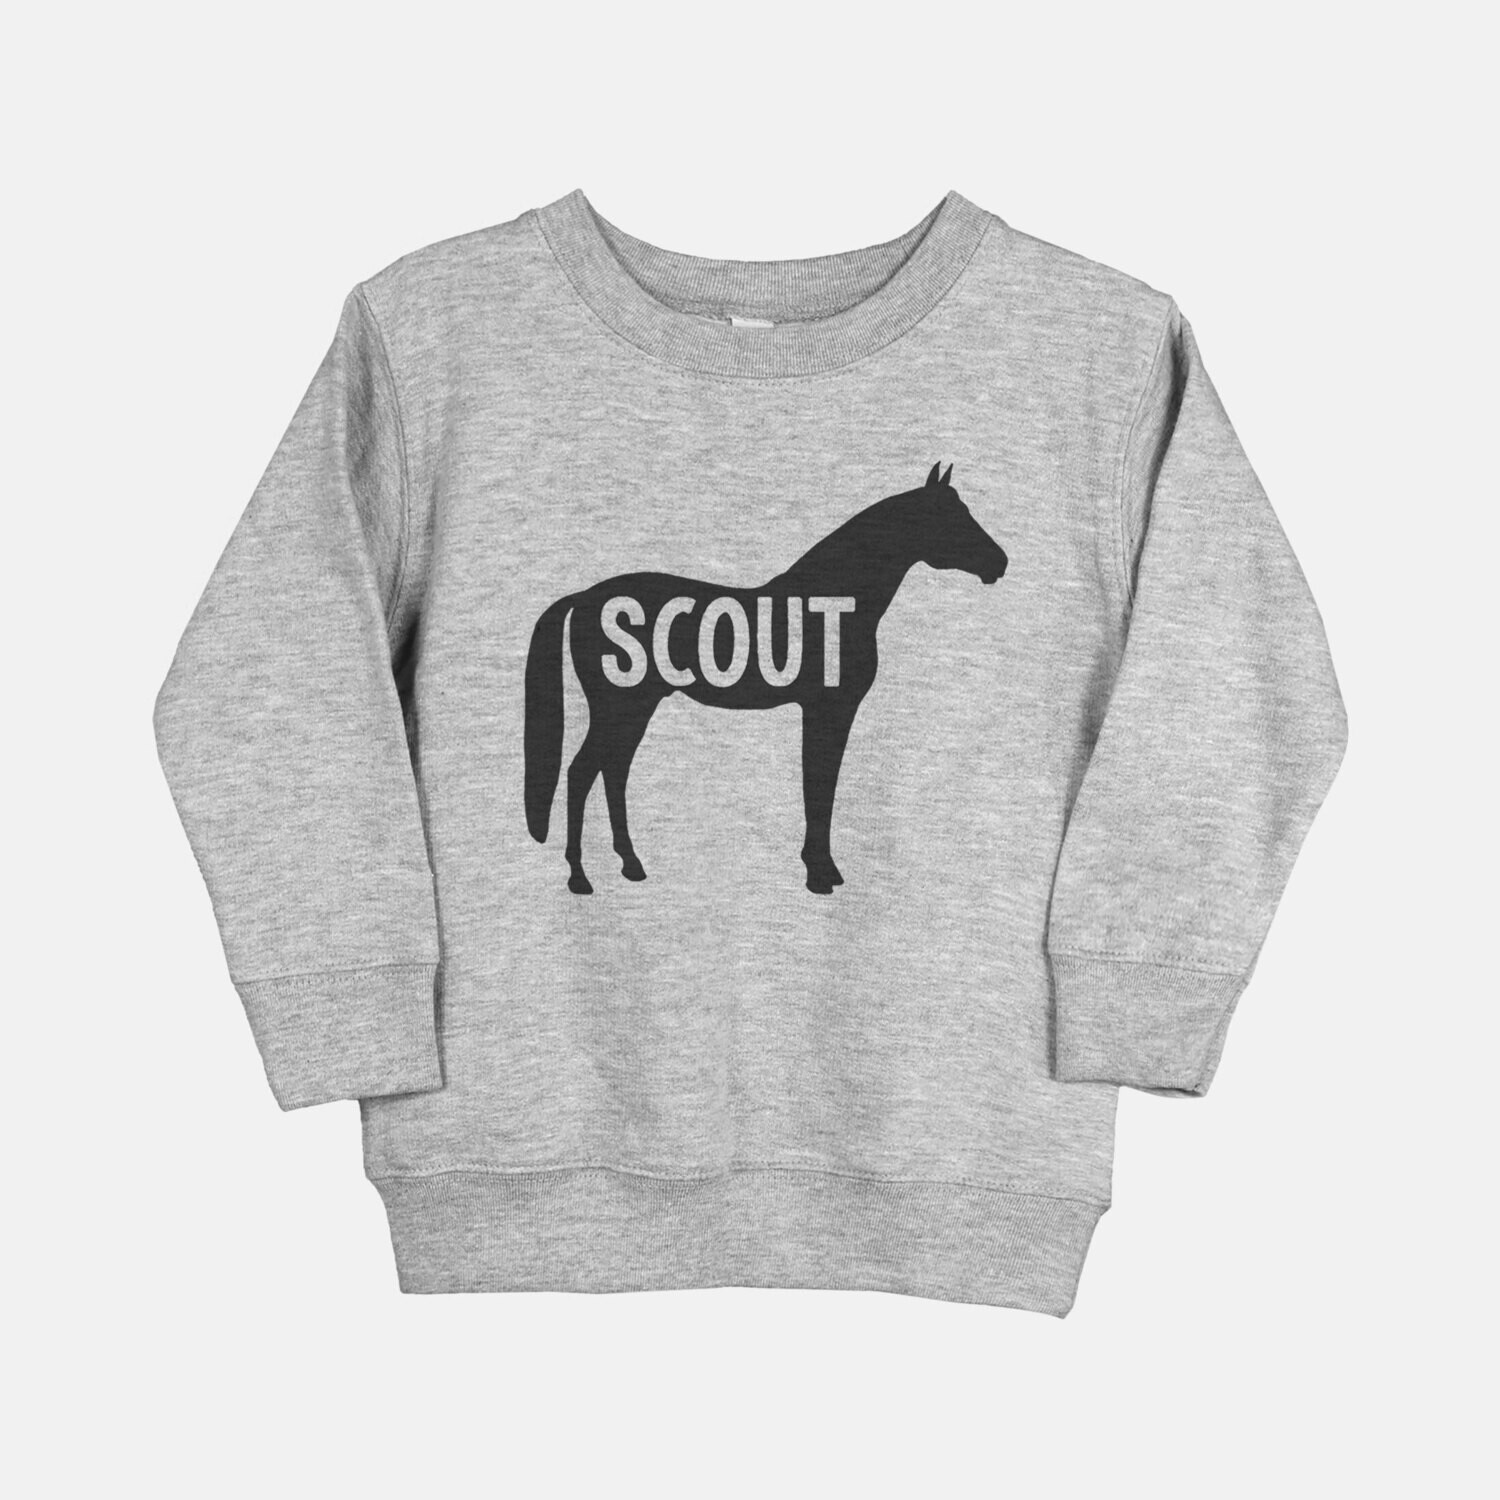 Youth Toddler Horse Name Crew Neck Sweatshirt